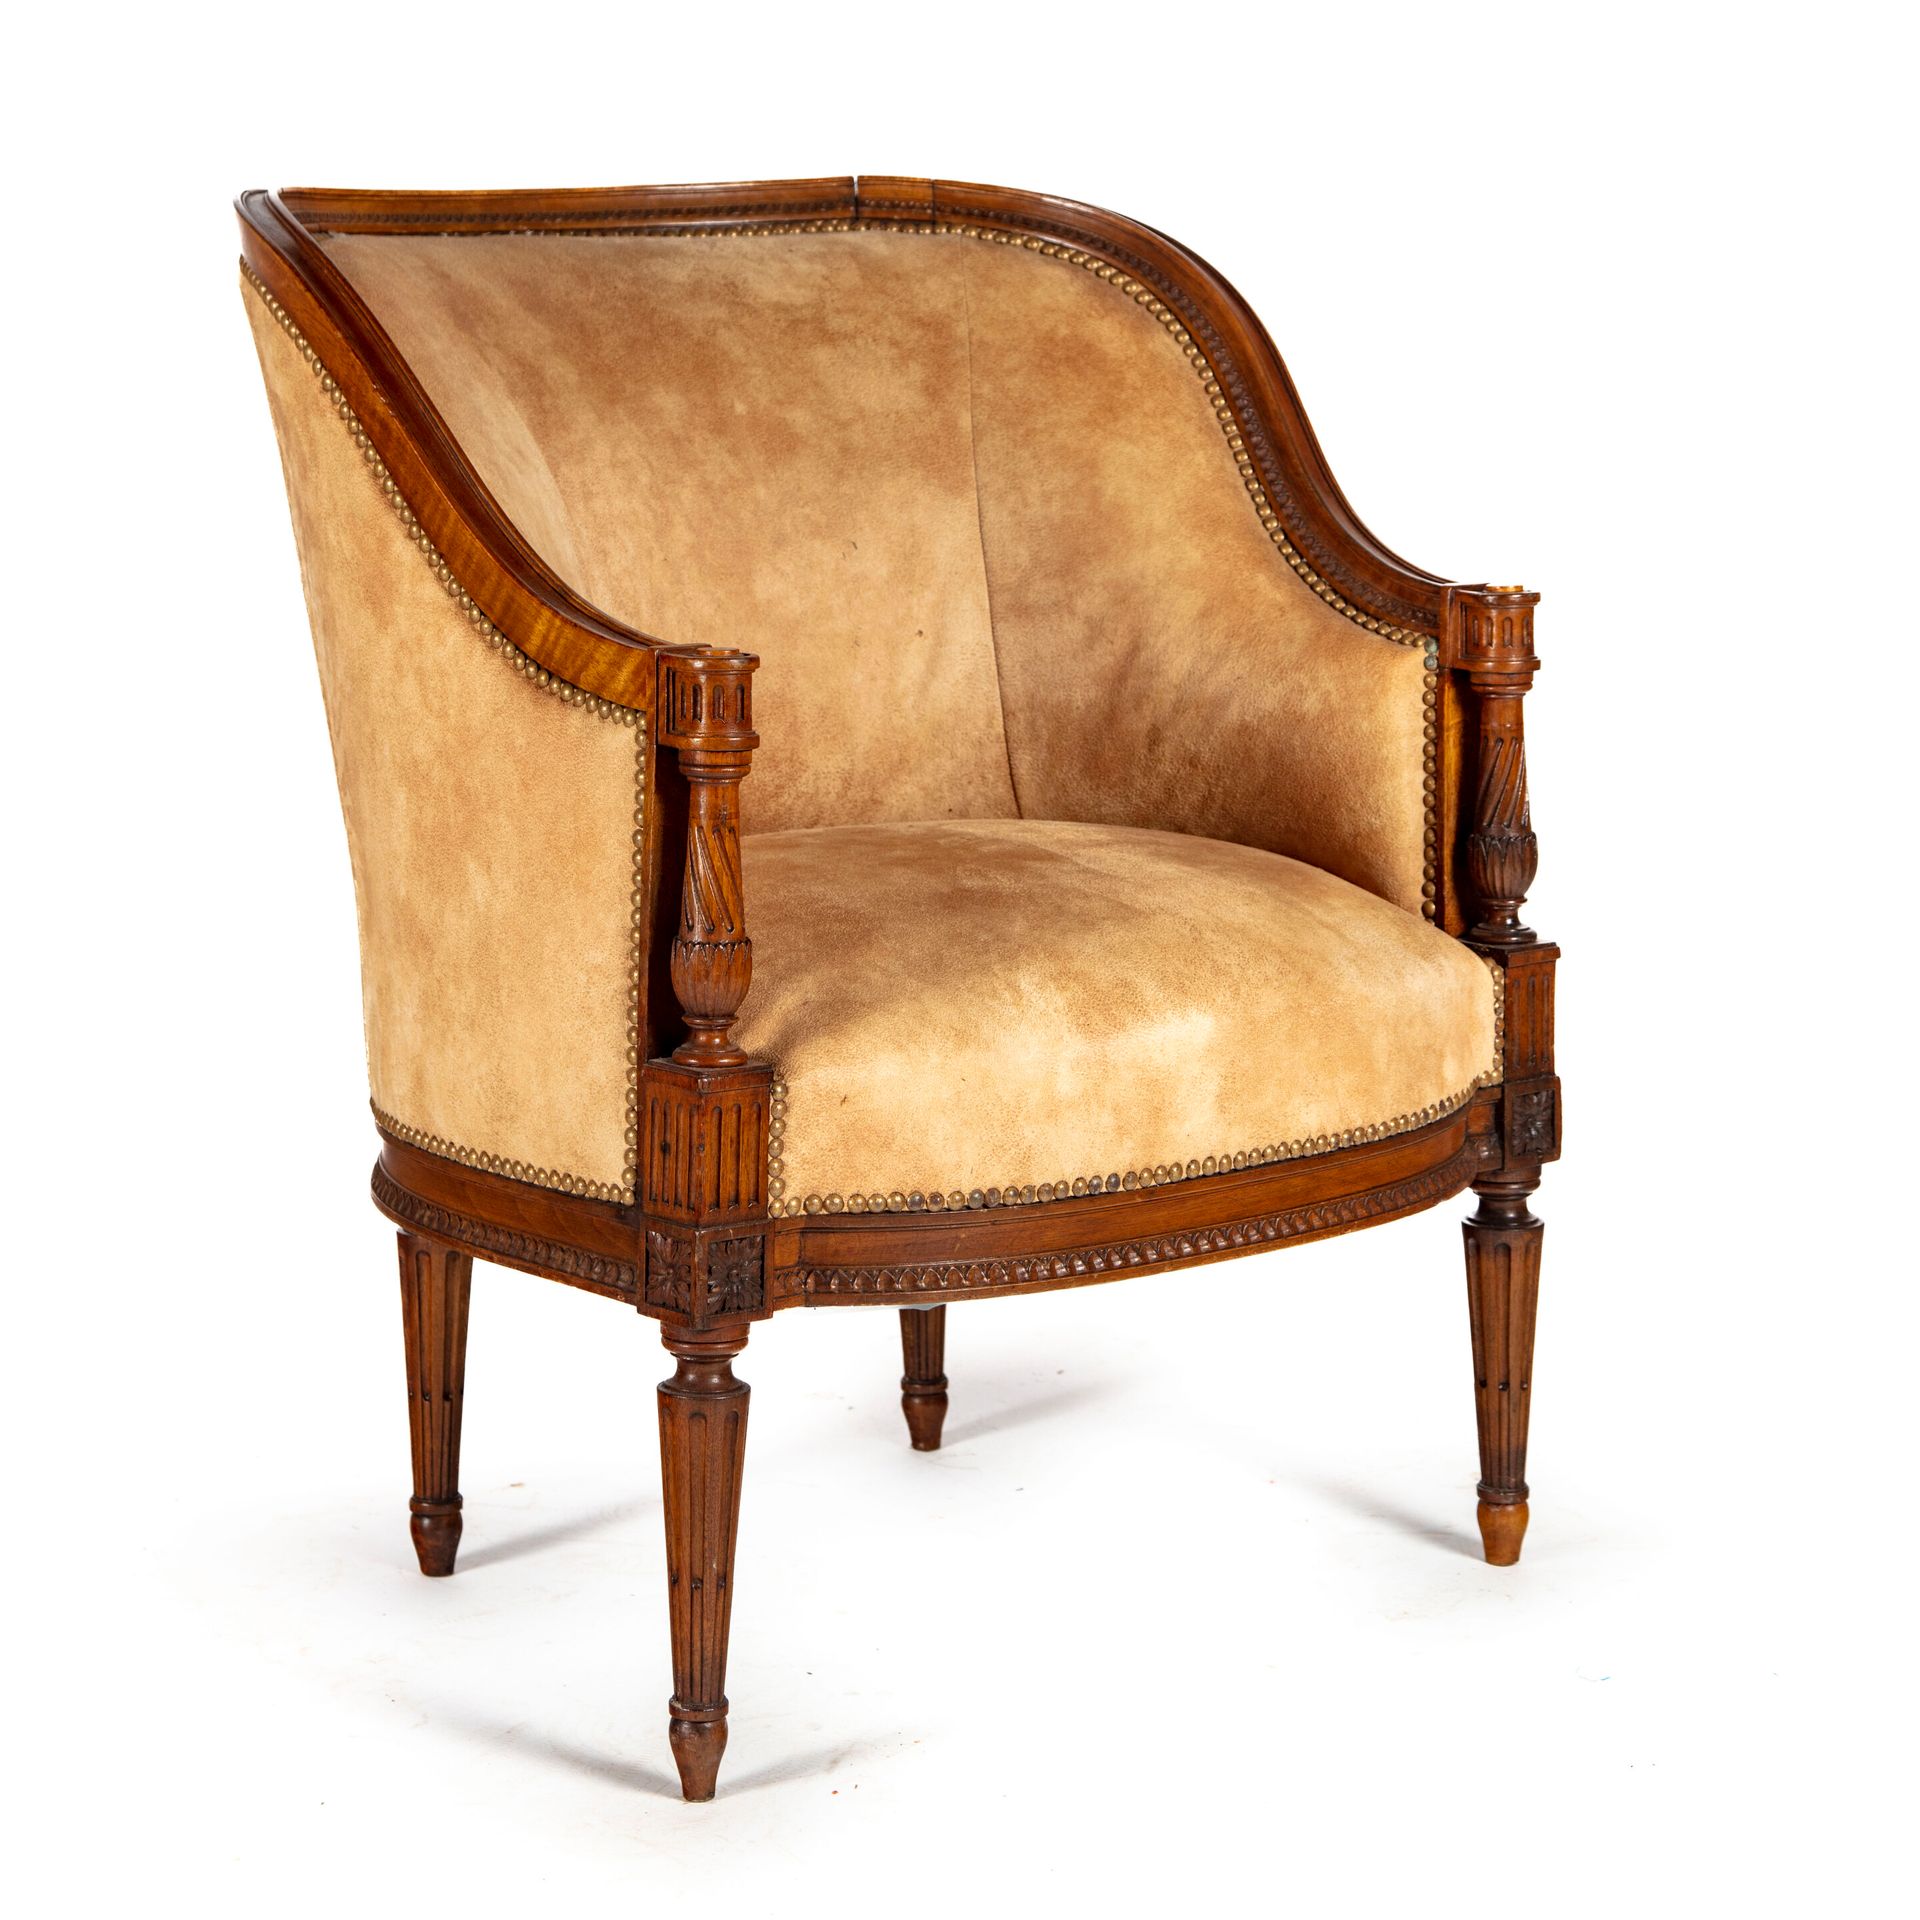 Null 贡多拉扶手椅，天然木质，带独立凹槽的柱子，靠在四个凹槽的锥形腿上。

路易十六风格

H.83 cm; W. 65 cm; D. 65 cm